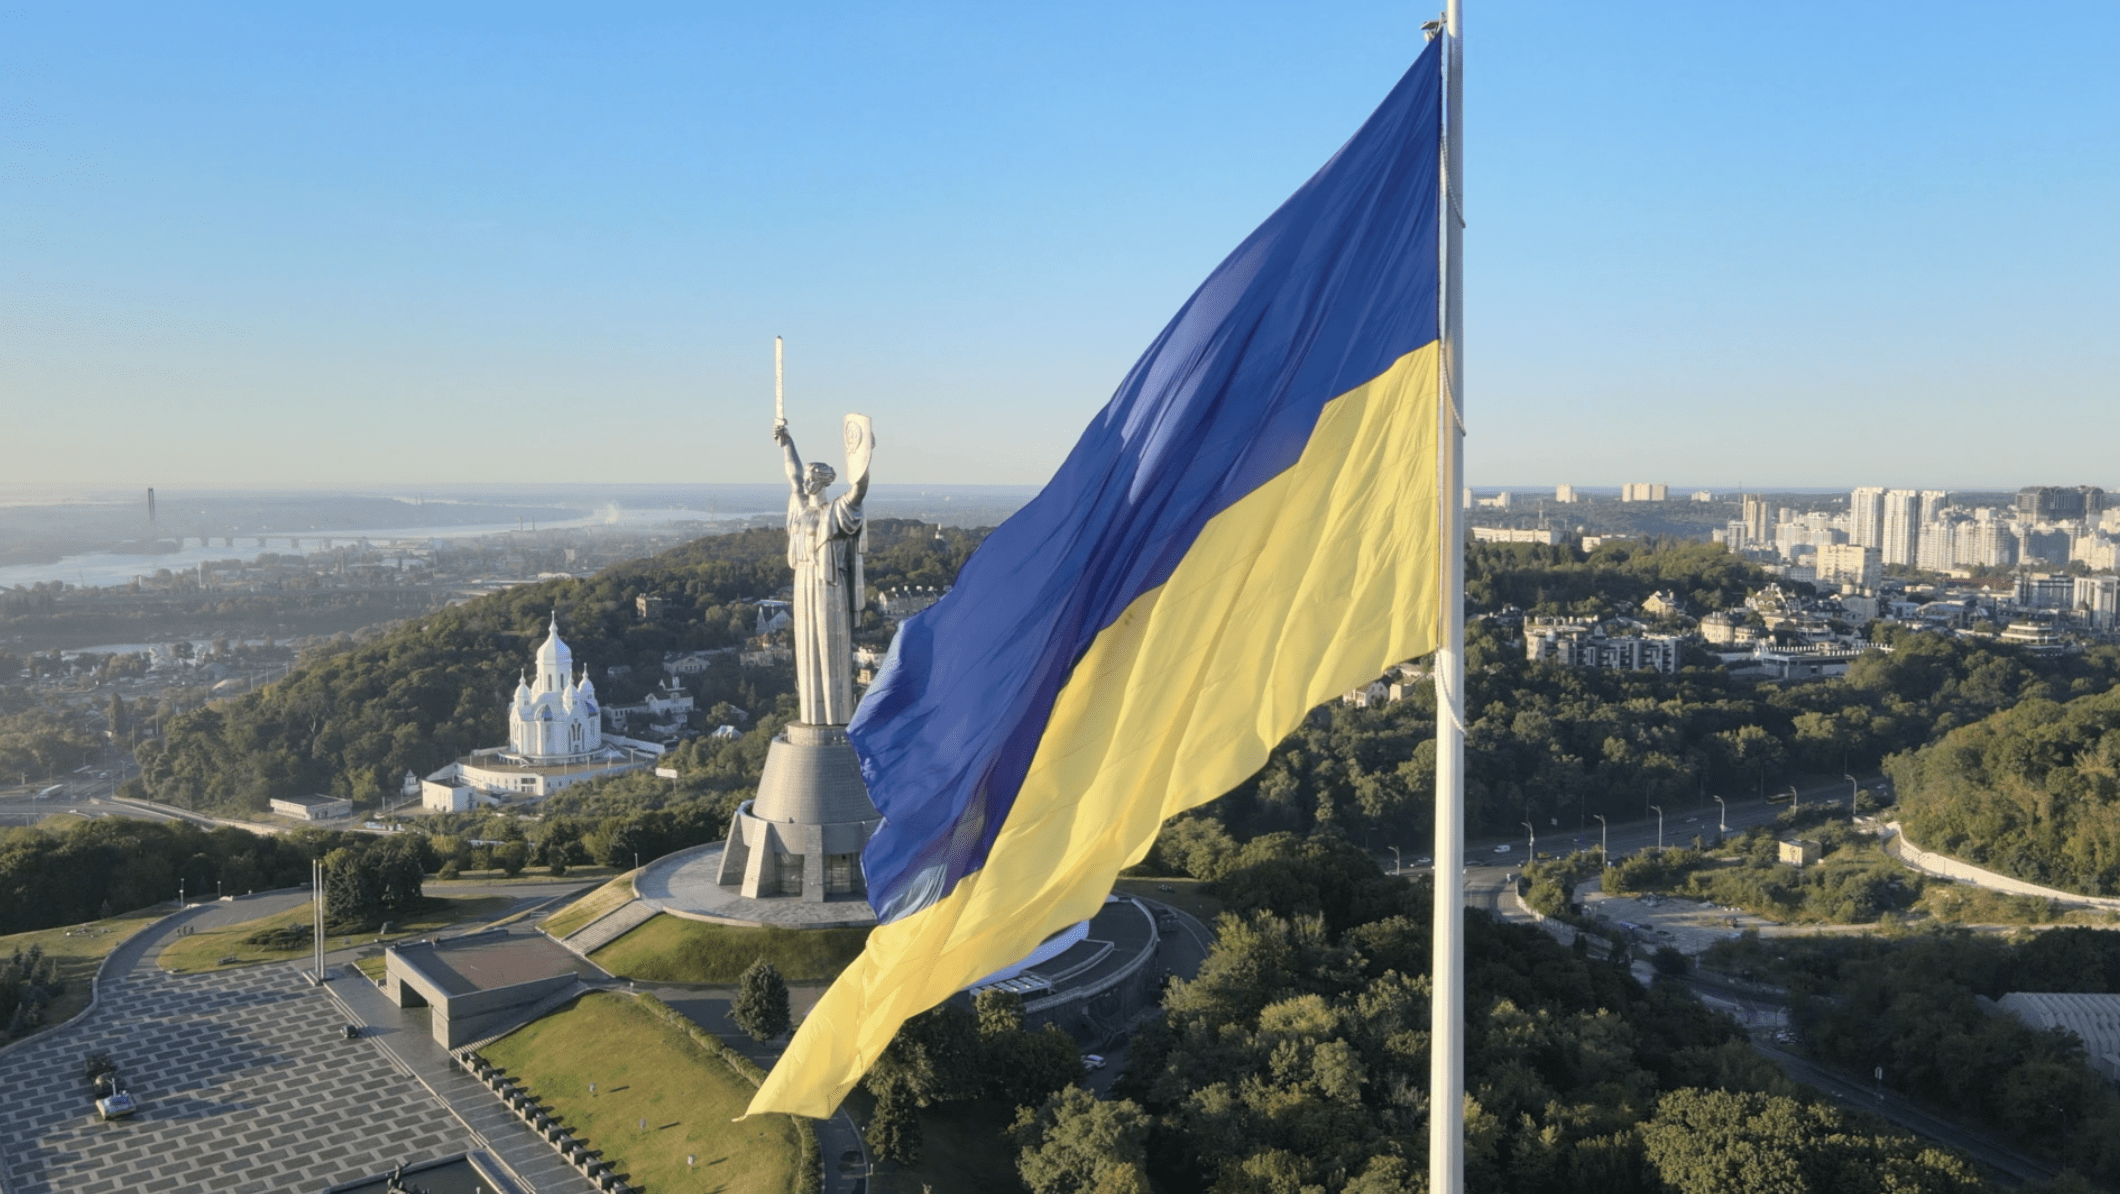 Ukraine National Anthem